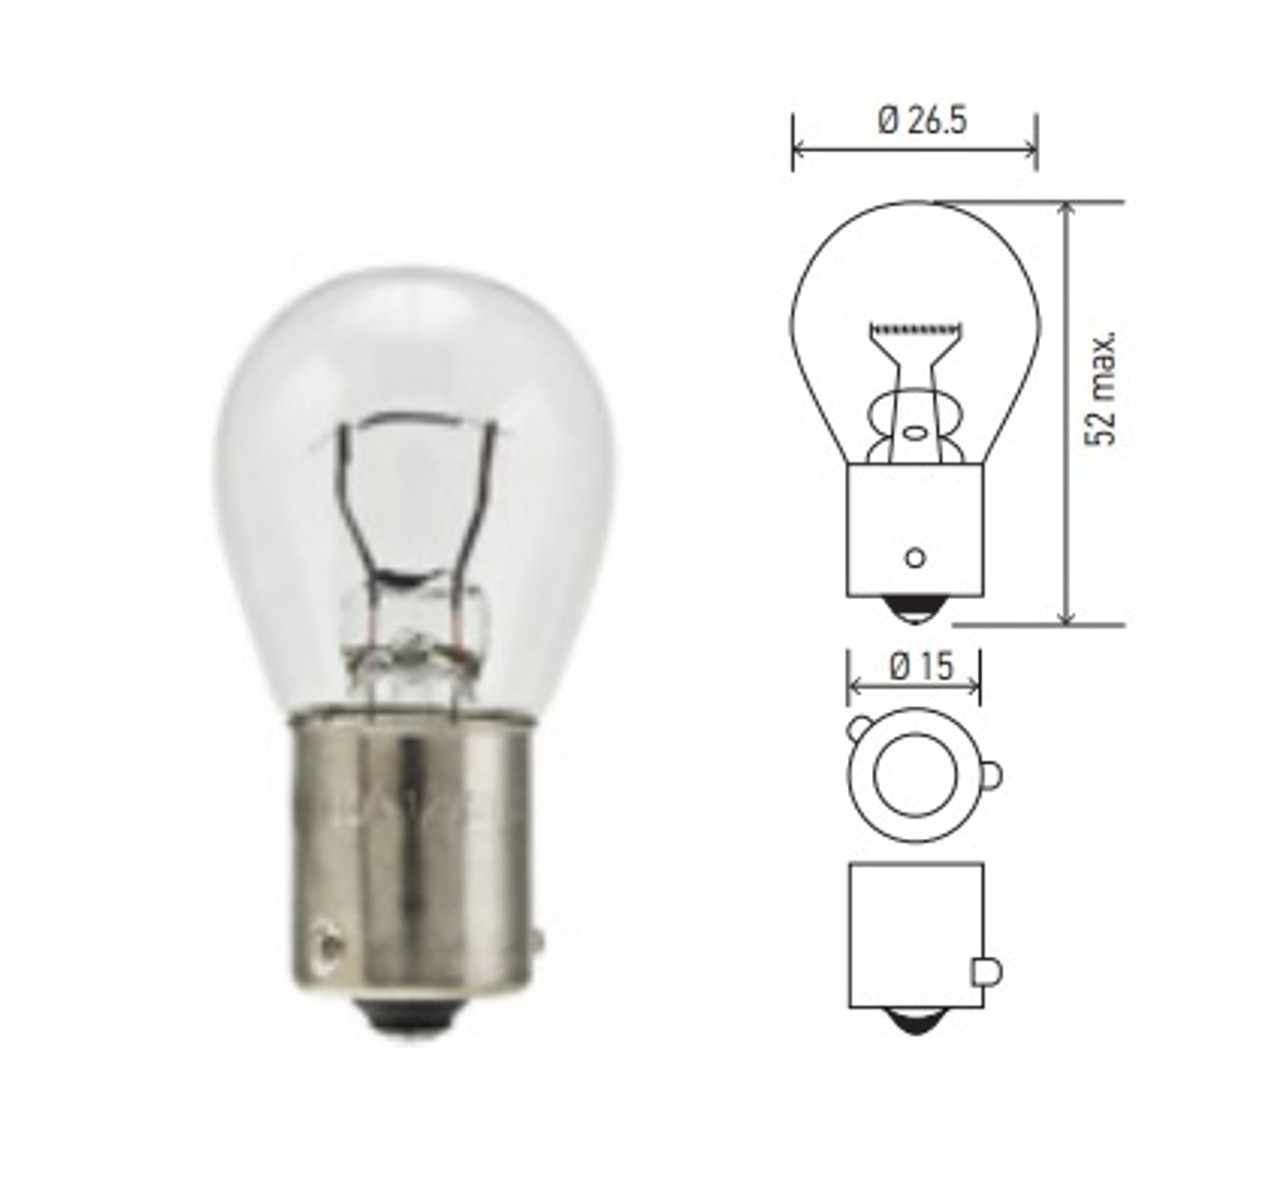 Hella Miniature Bulb 7507